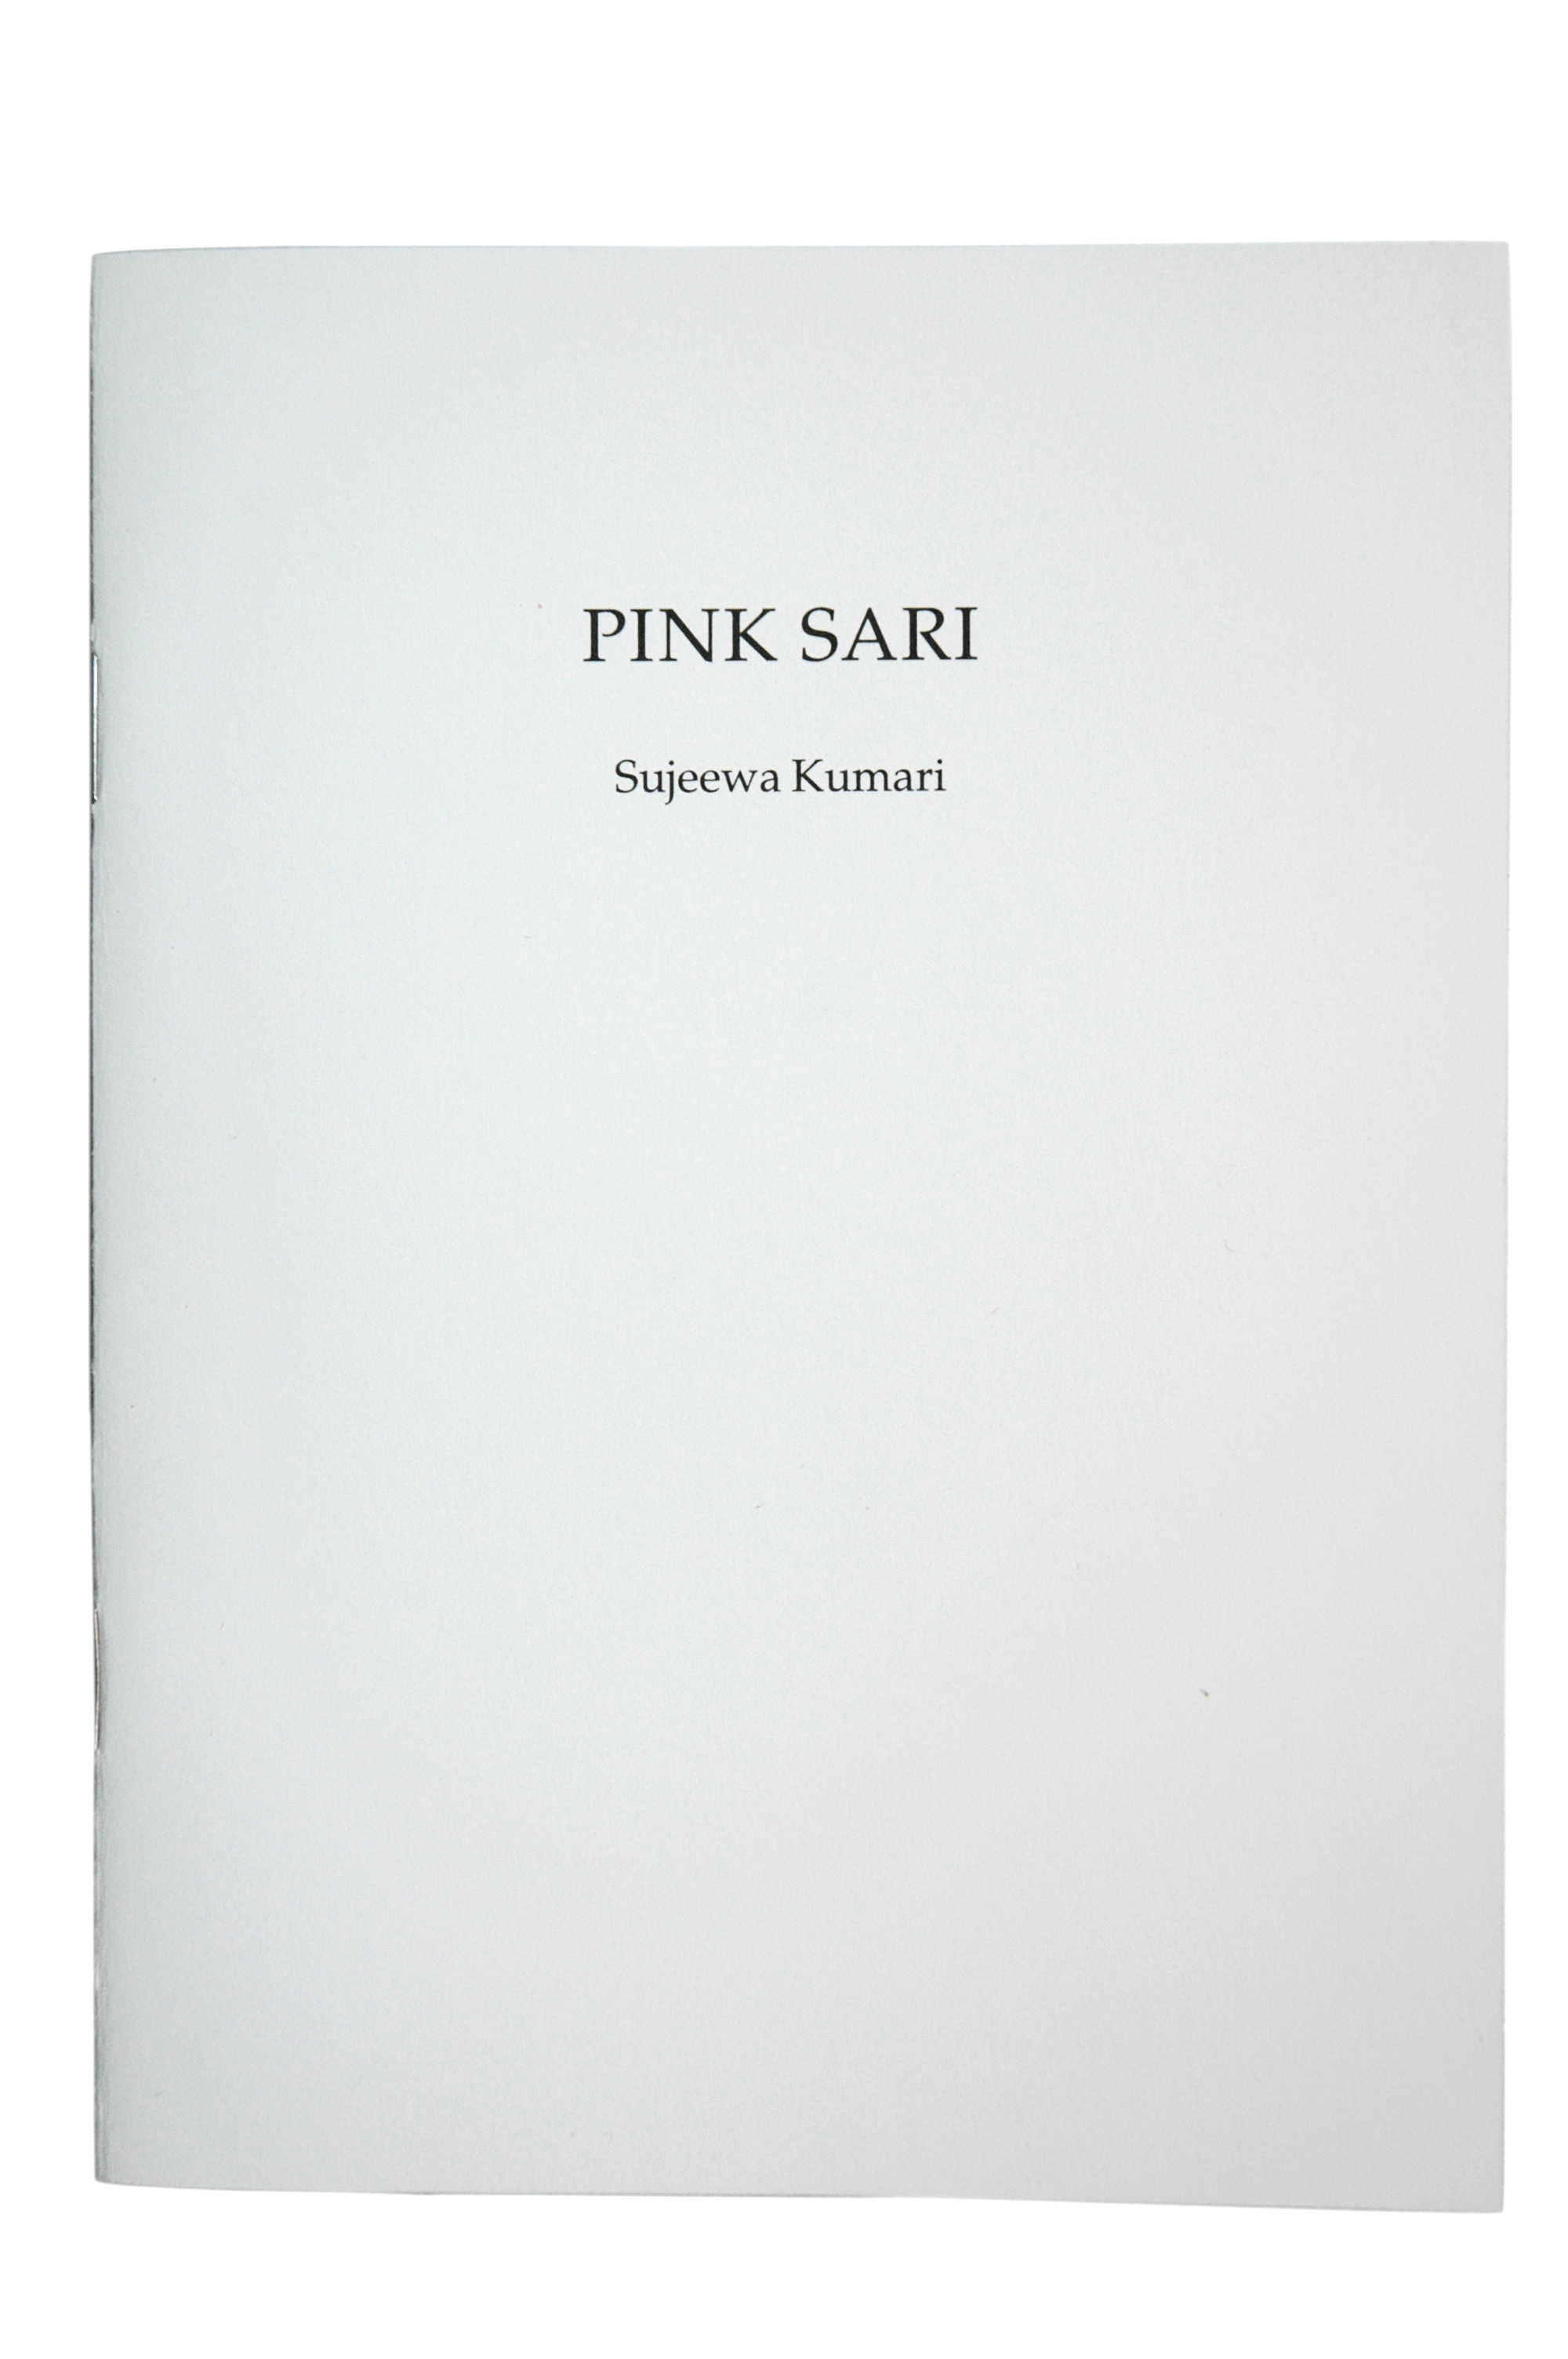 Sujeewa Kumari: Pink Sari [cover]